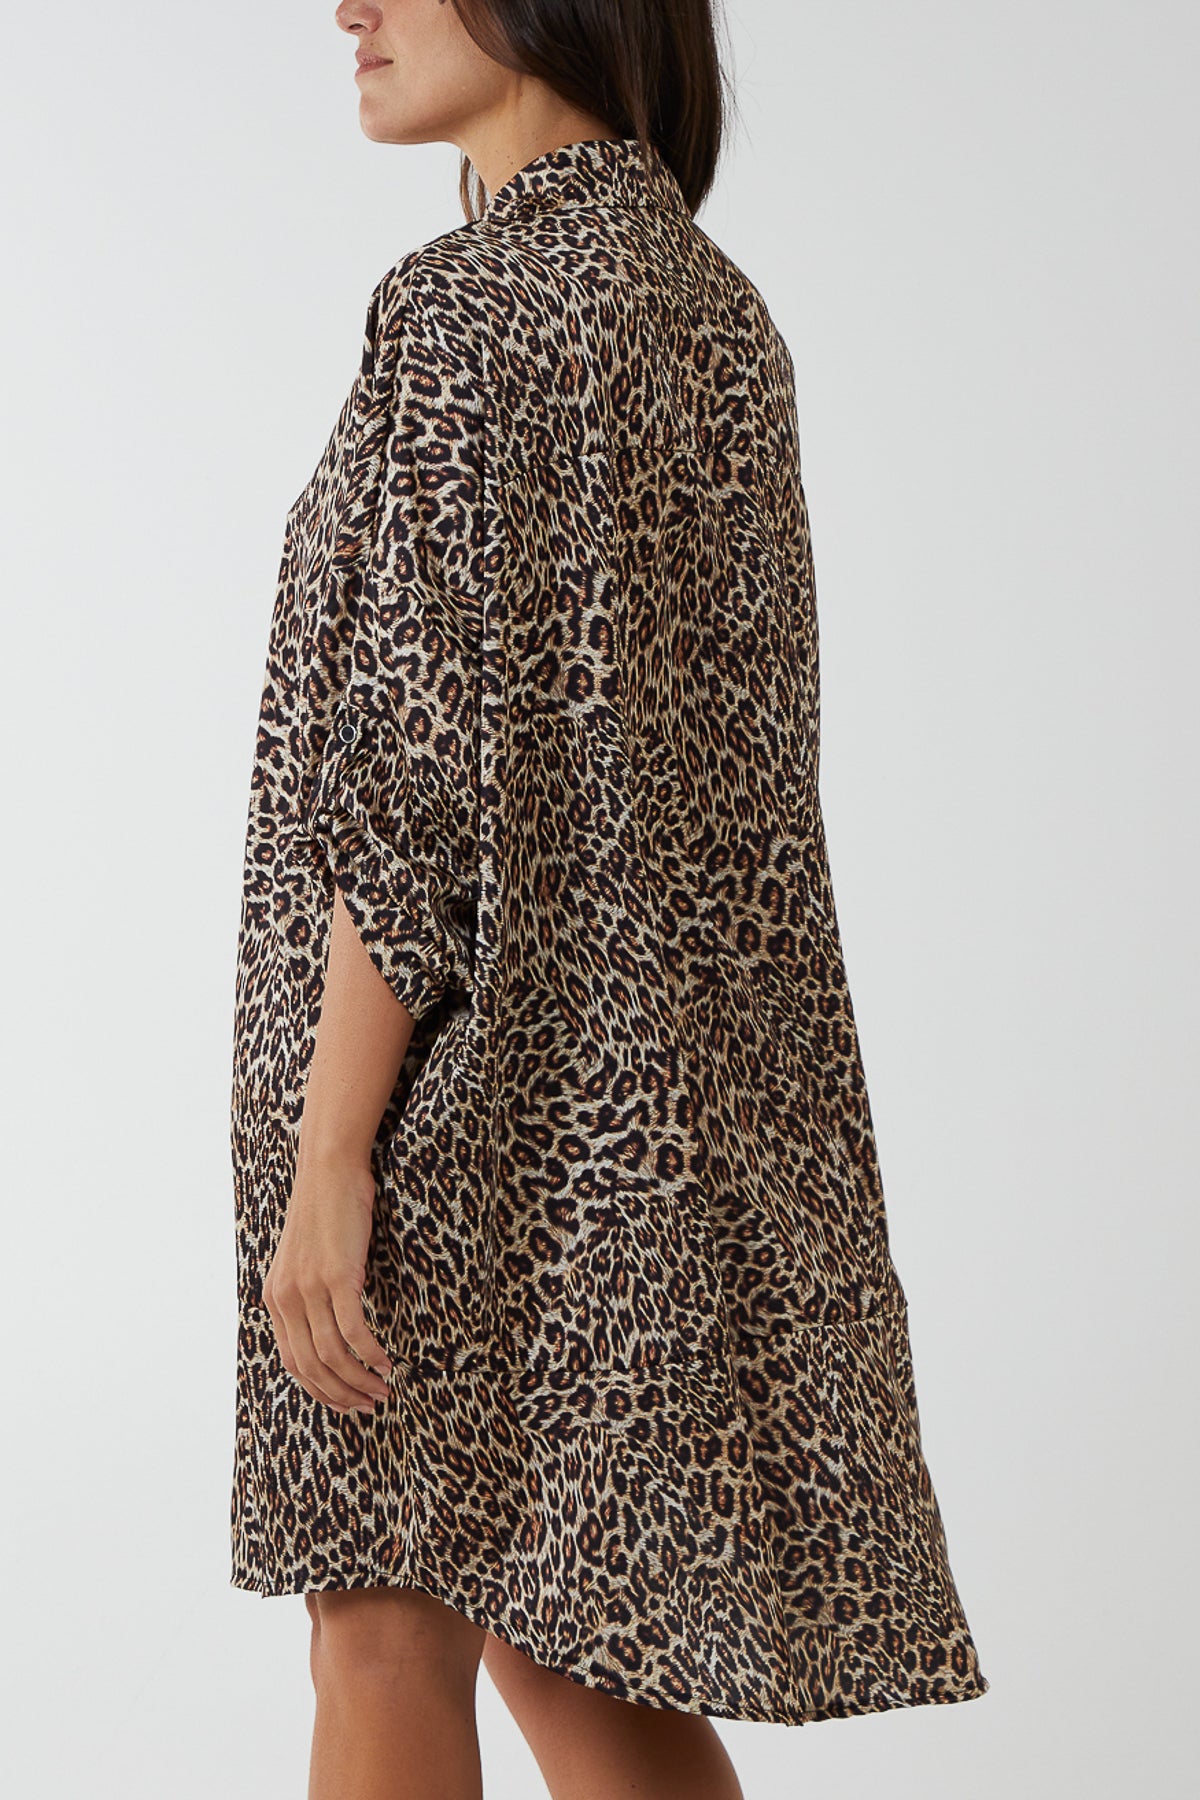 Satin Leopard Print Shirt Dress